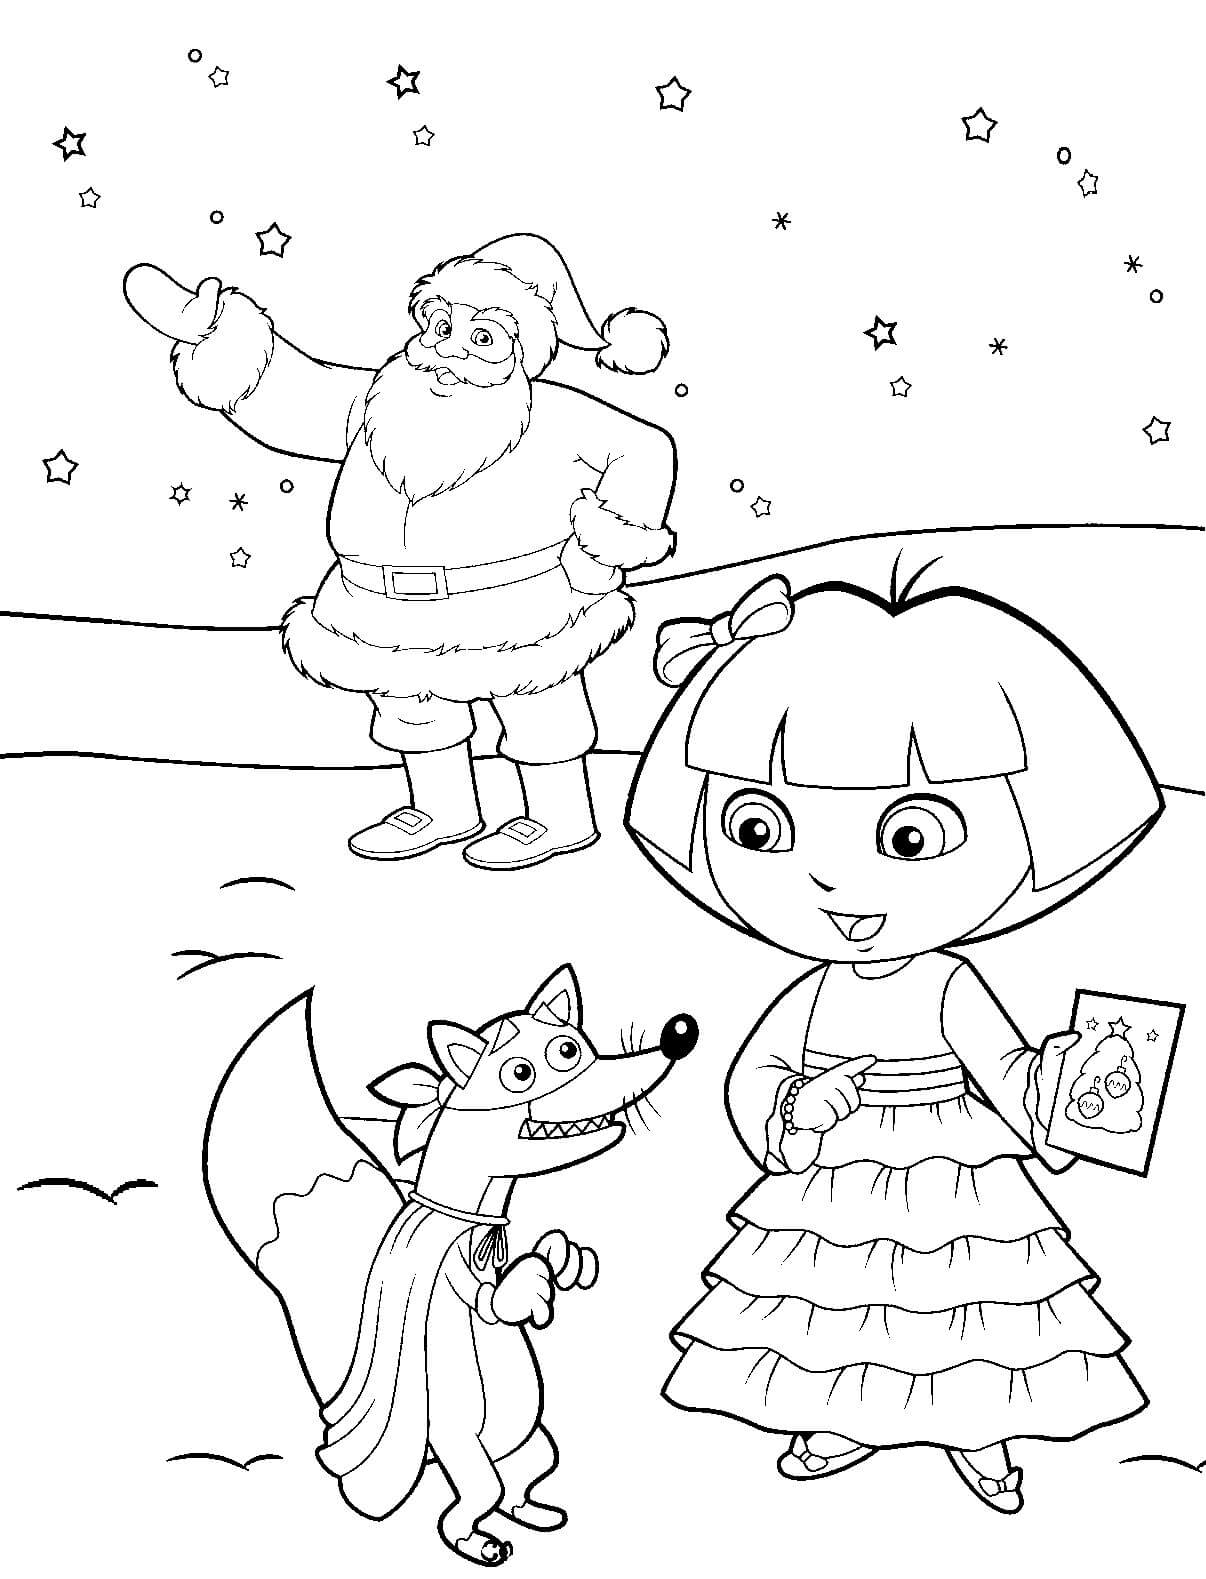 Раскраска Даша-путешественница, Жулик и Санта Клаус